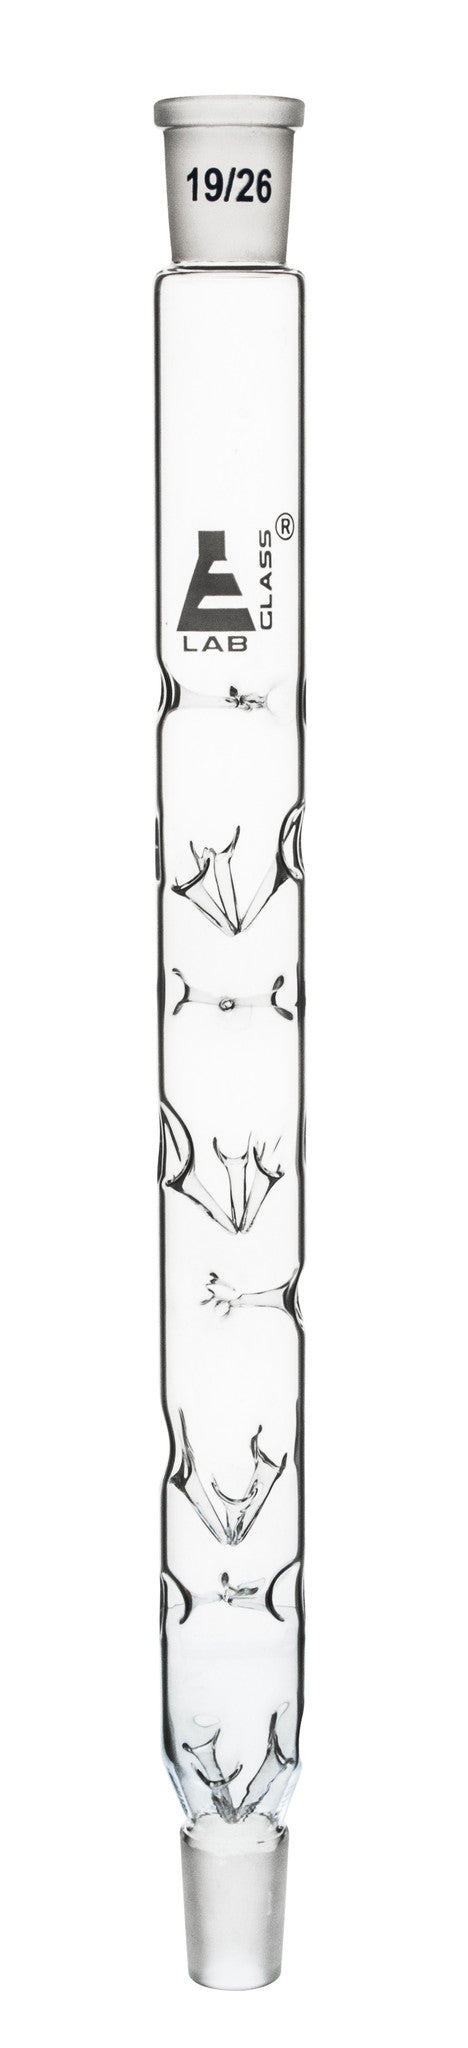 Vigrex Columns